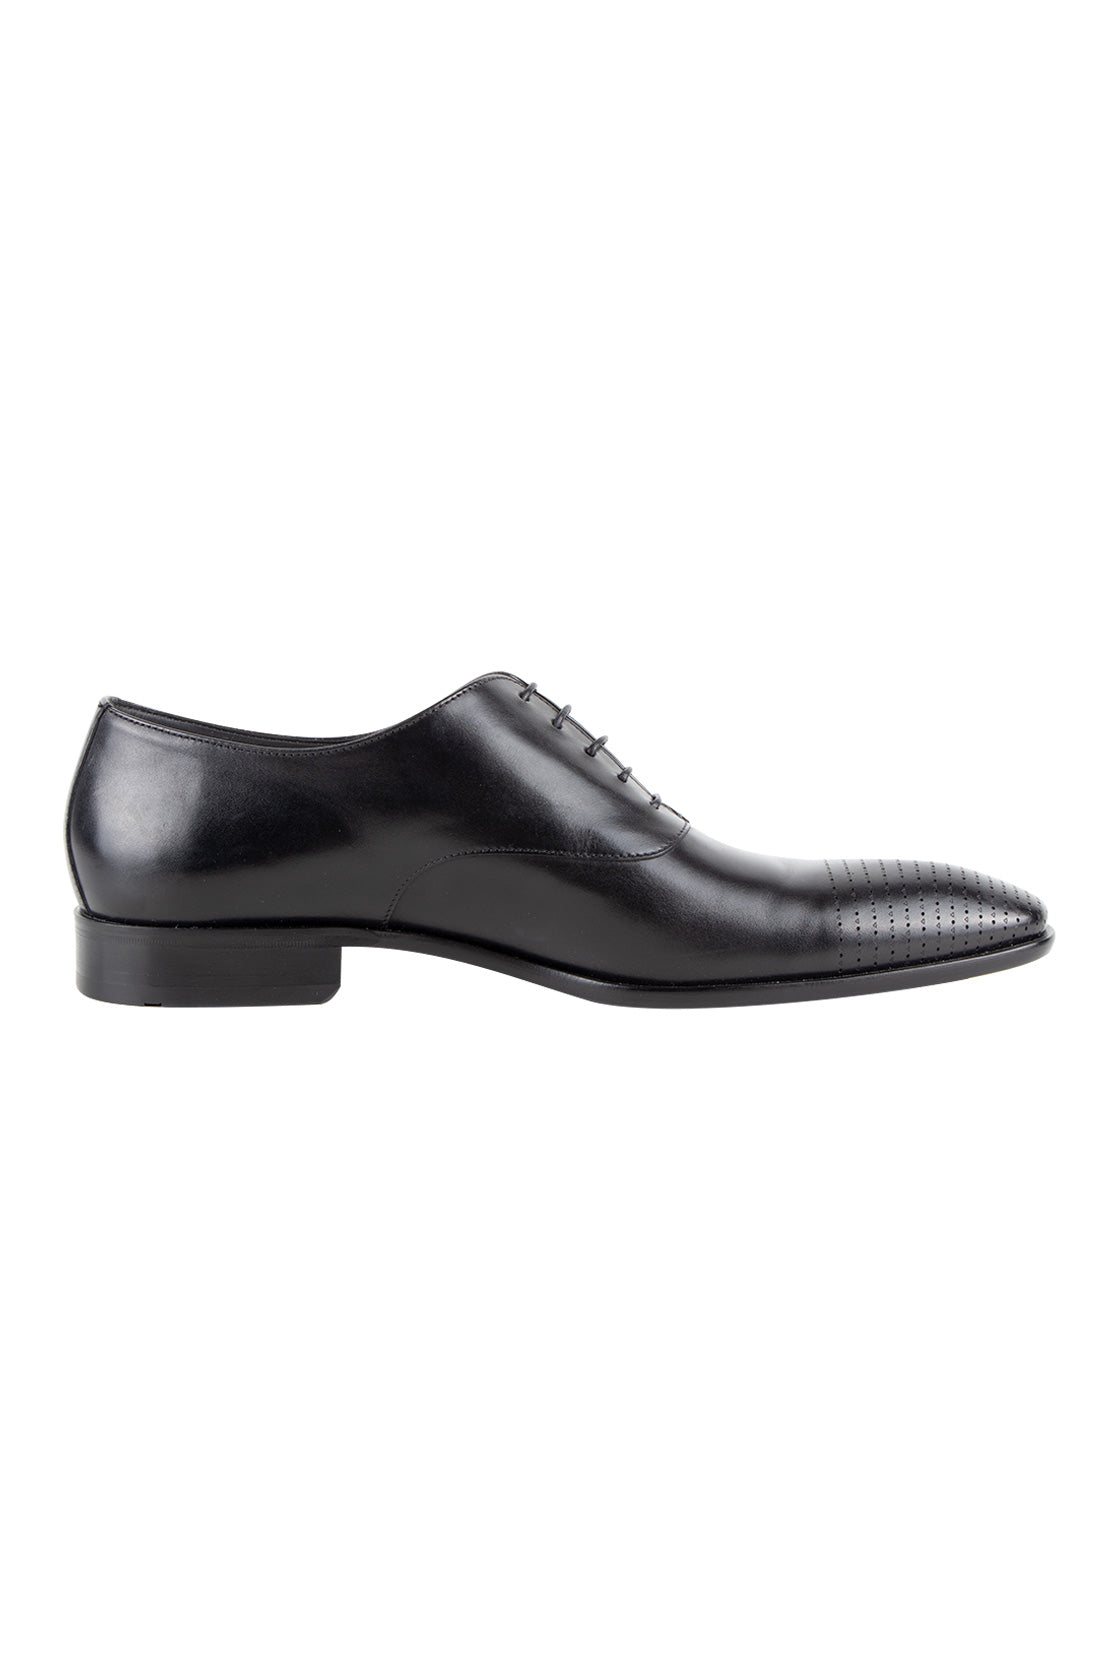 Hugo Boss Certeo Shoe Black